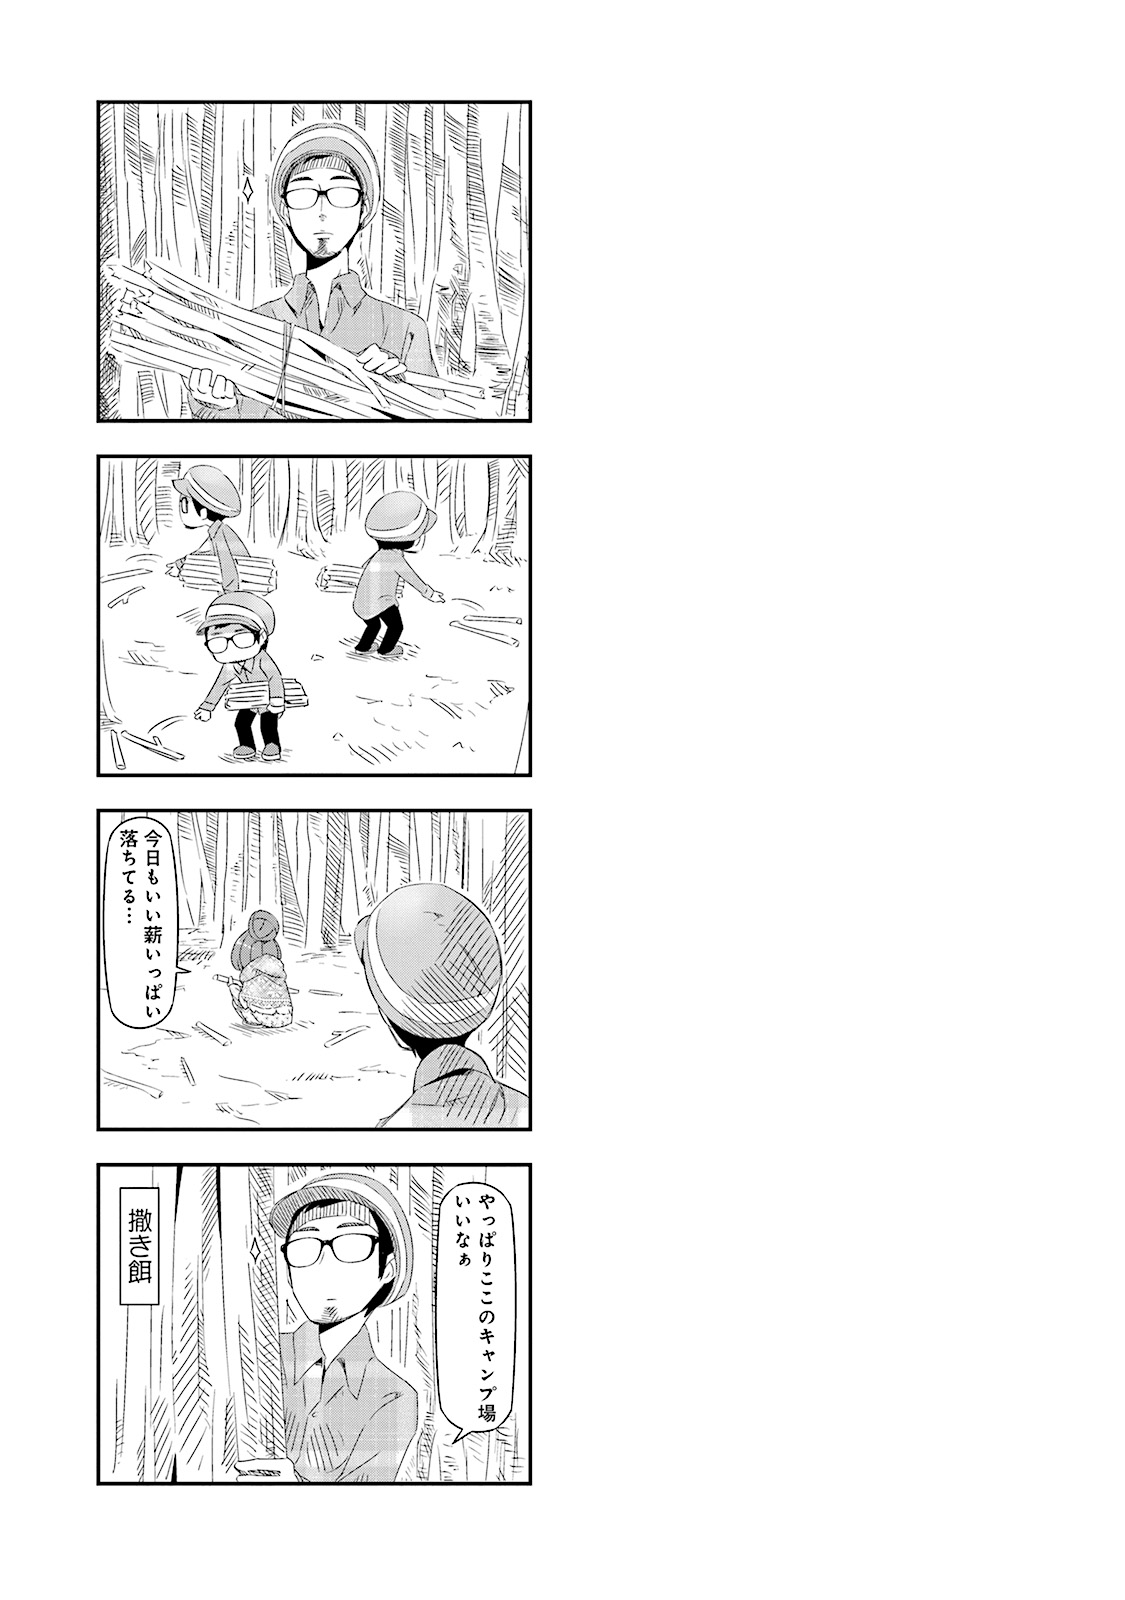 Yuru Camp - Chapter 1 - Page 37